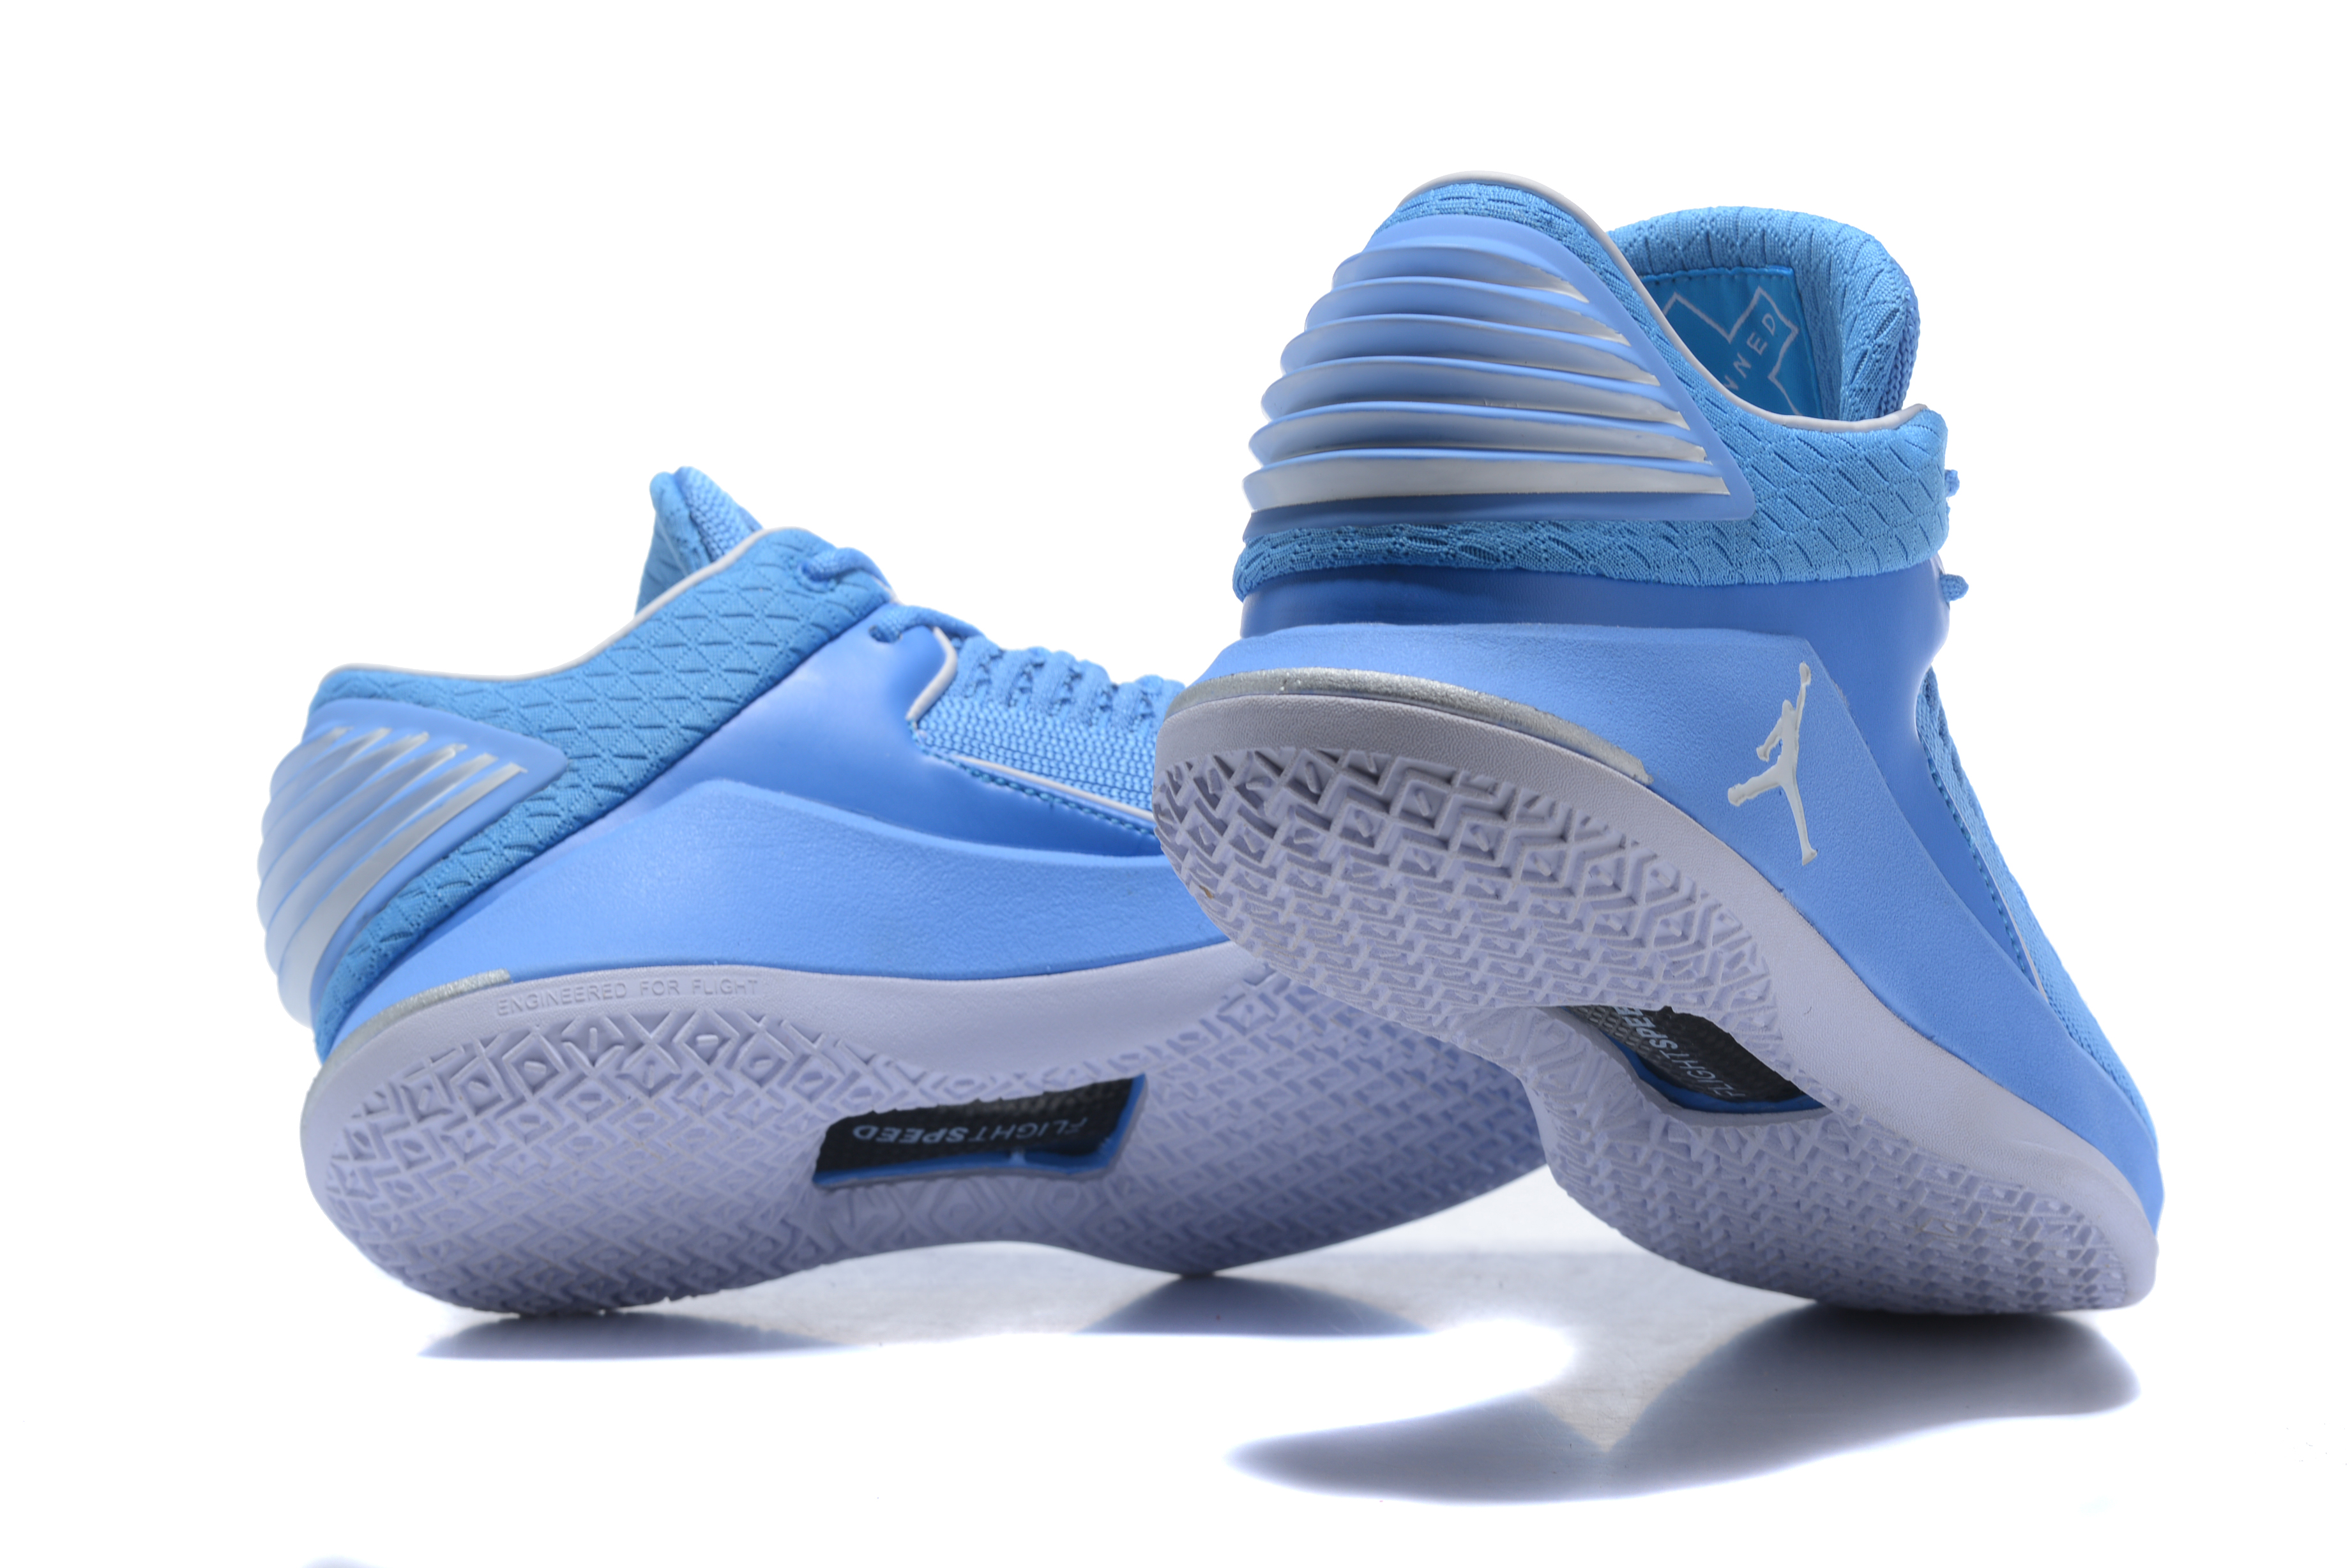 New Air Jordan 32 Low "UNC" University Blue/White Men's Basketball Shoes